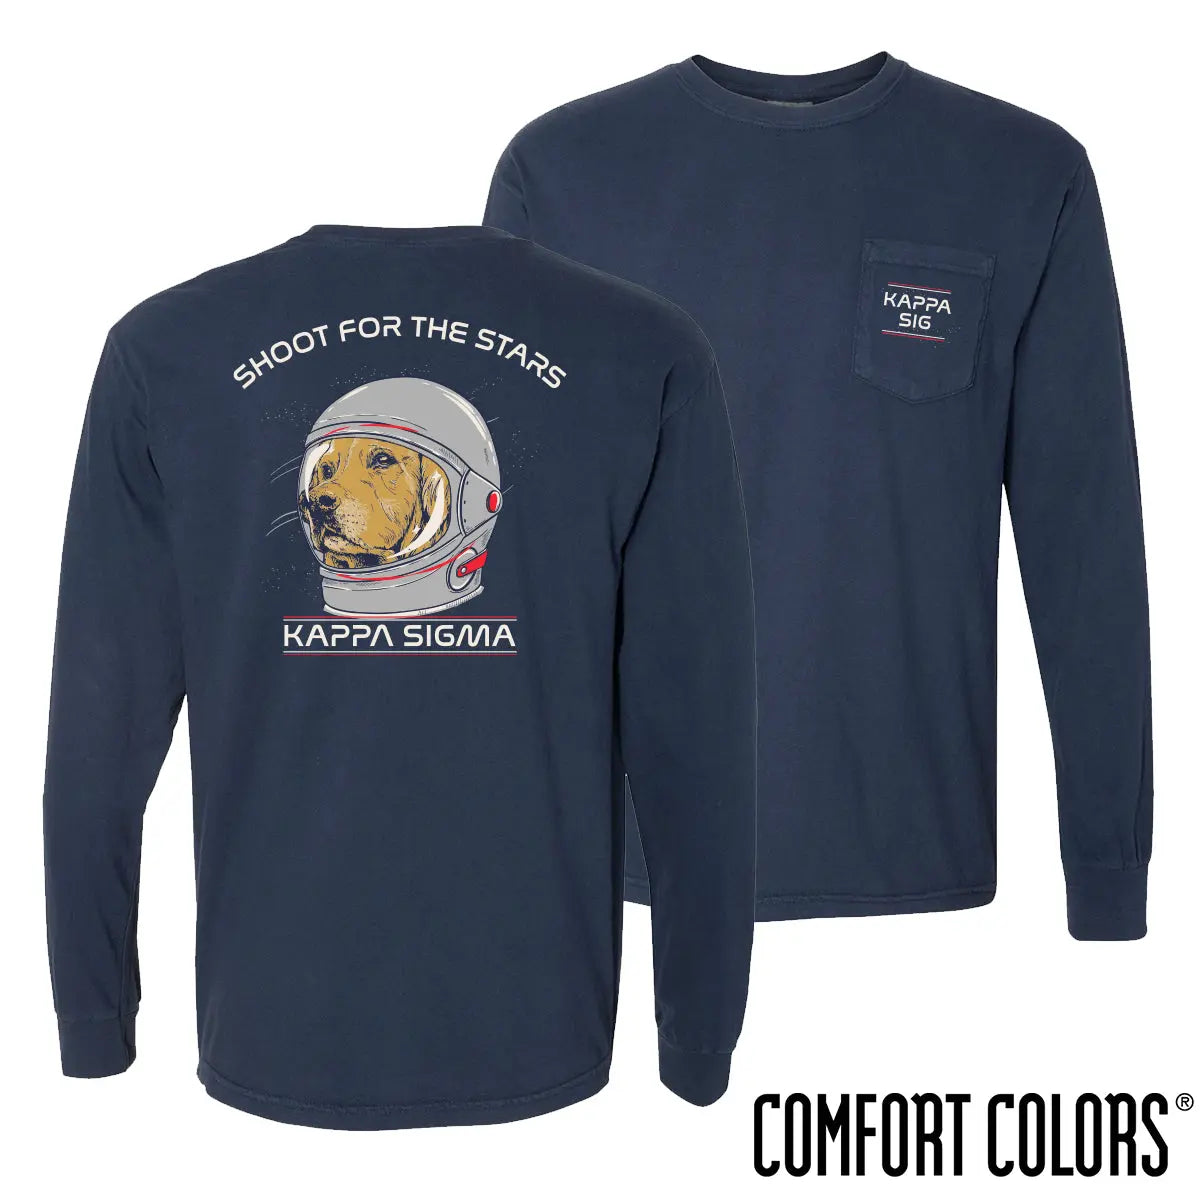 New! Kappa Sig Comfort Colors Astronaut Retriever Long Sleeve Tee